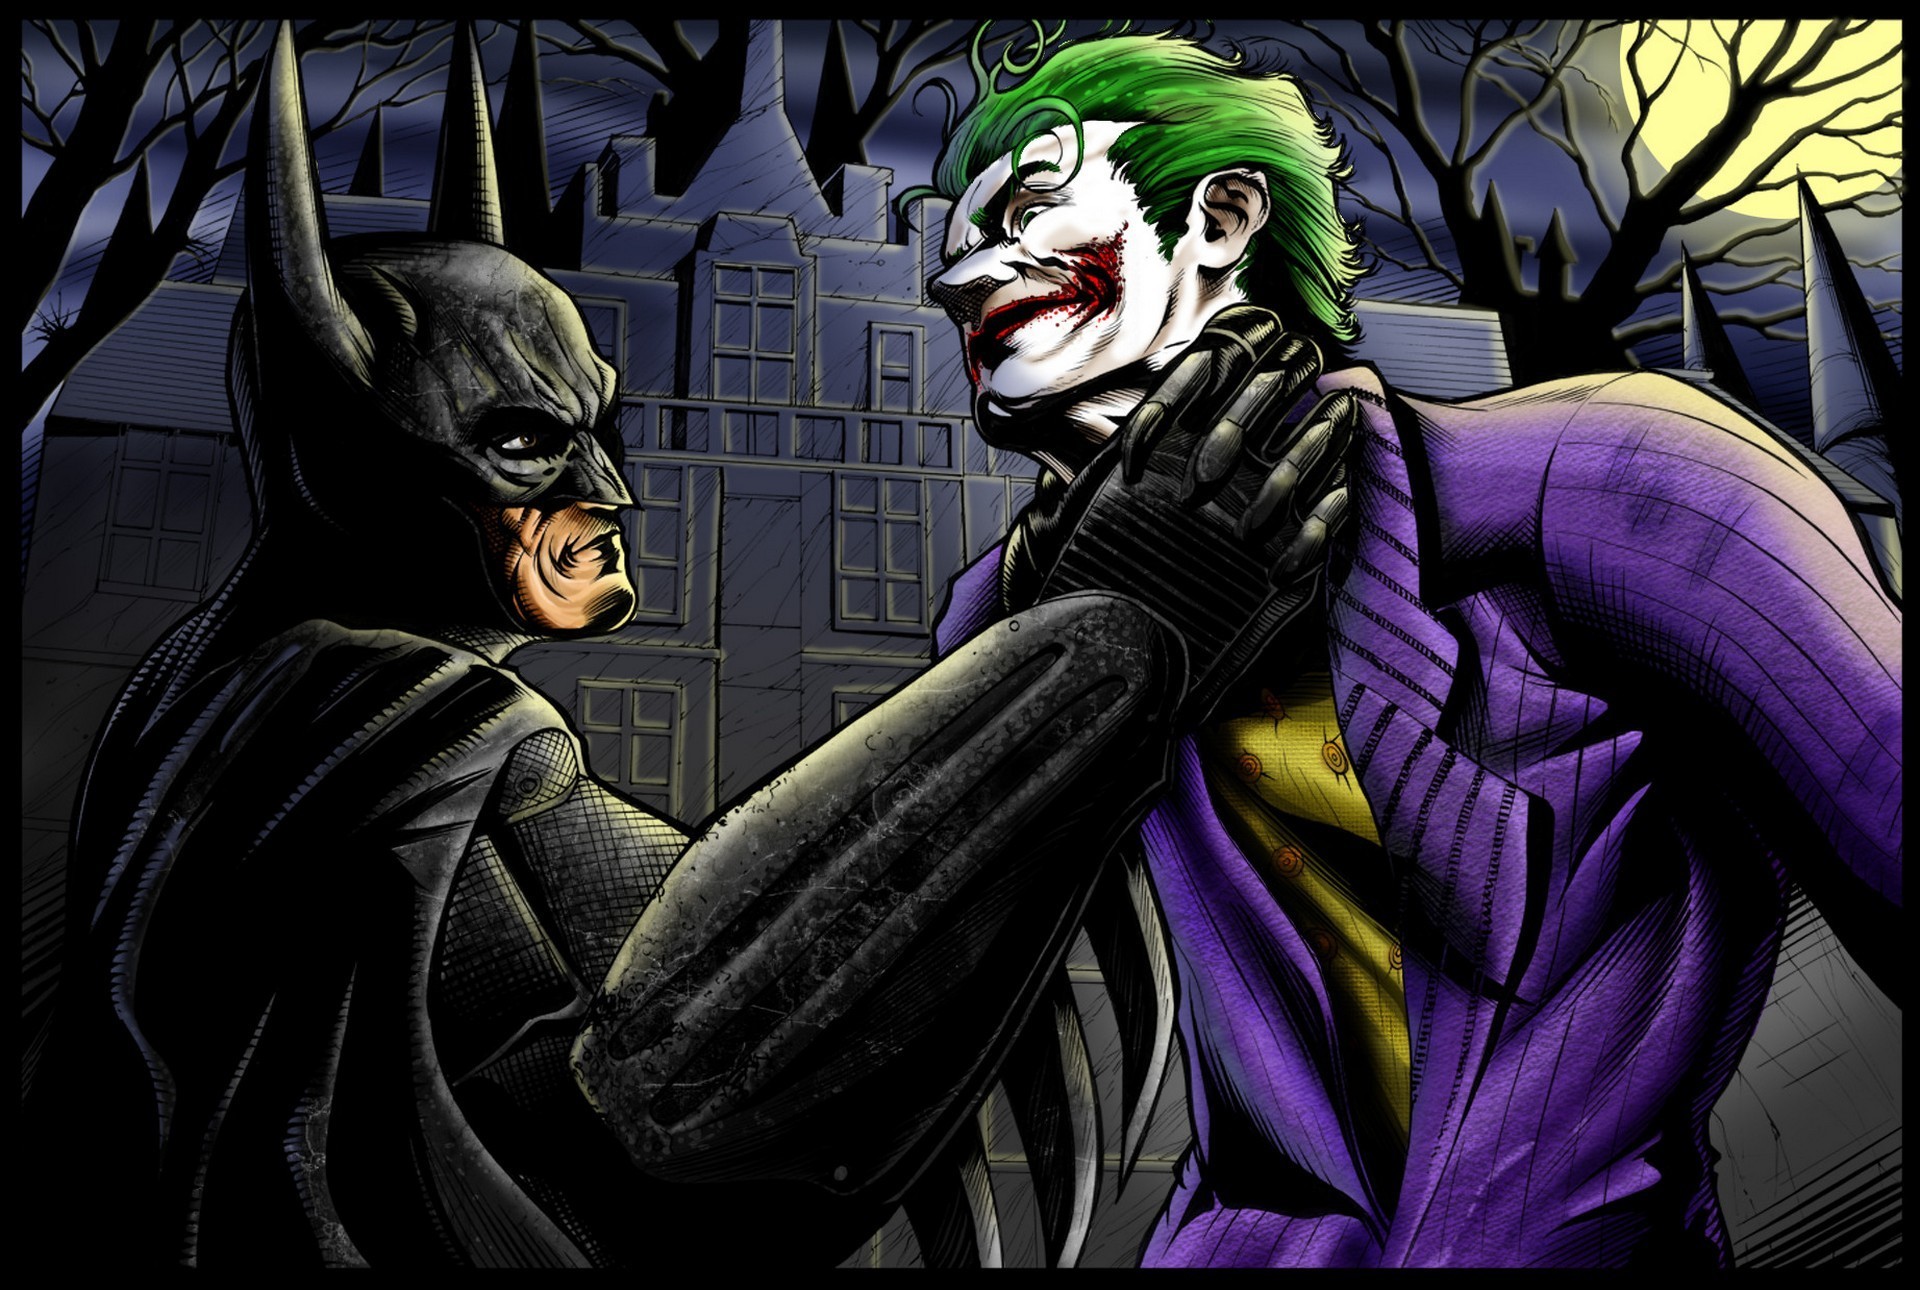  Batman vs Joker  Wallpapers   WallpaperTag